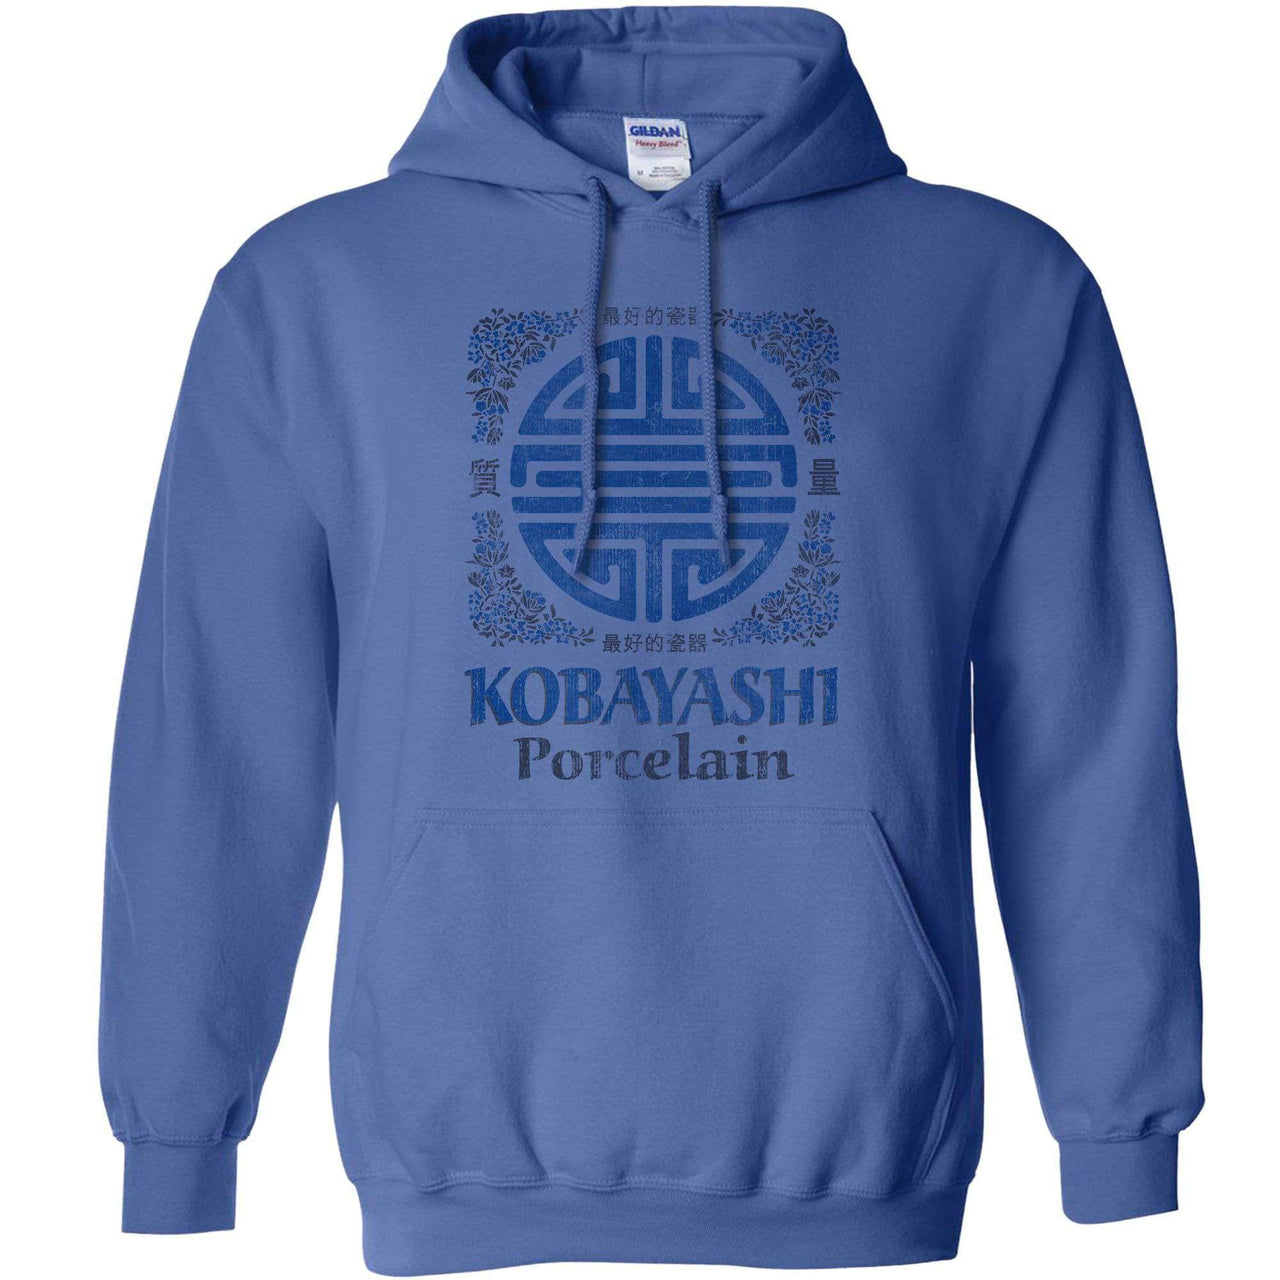 Kobayashi Porcelain Hoodie For Men and Women 8Ball